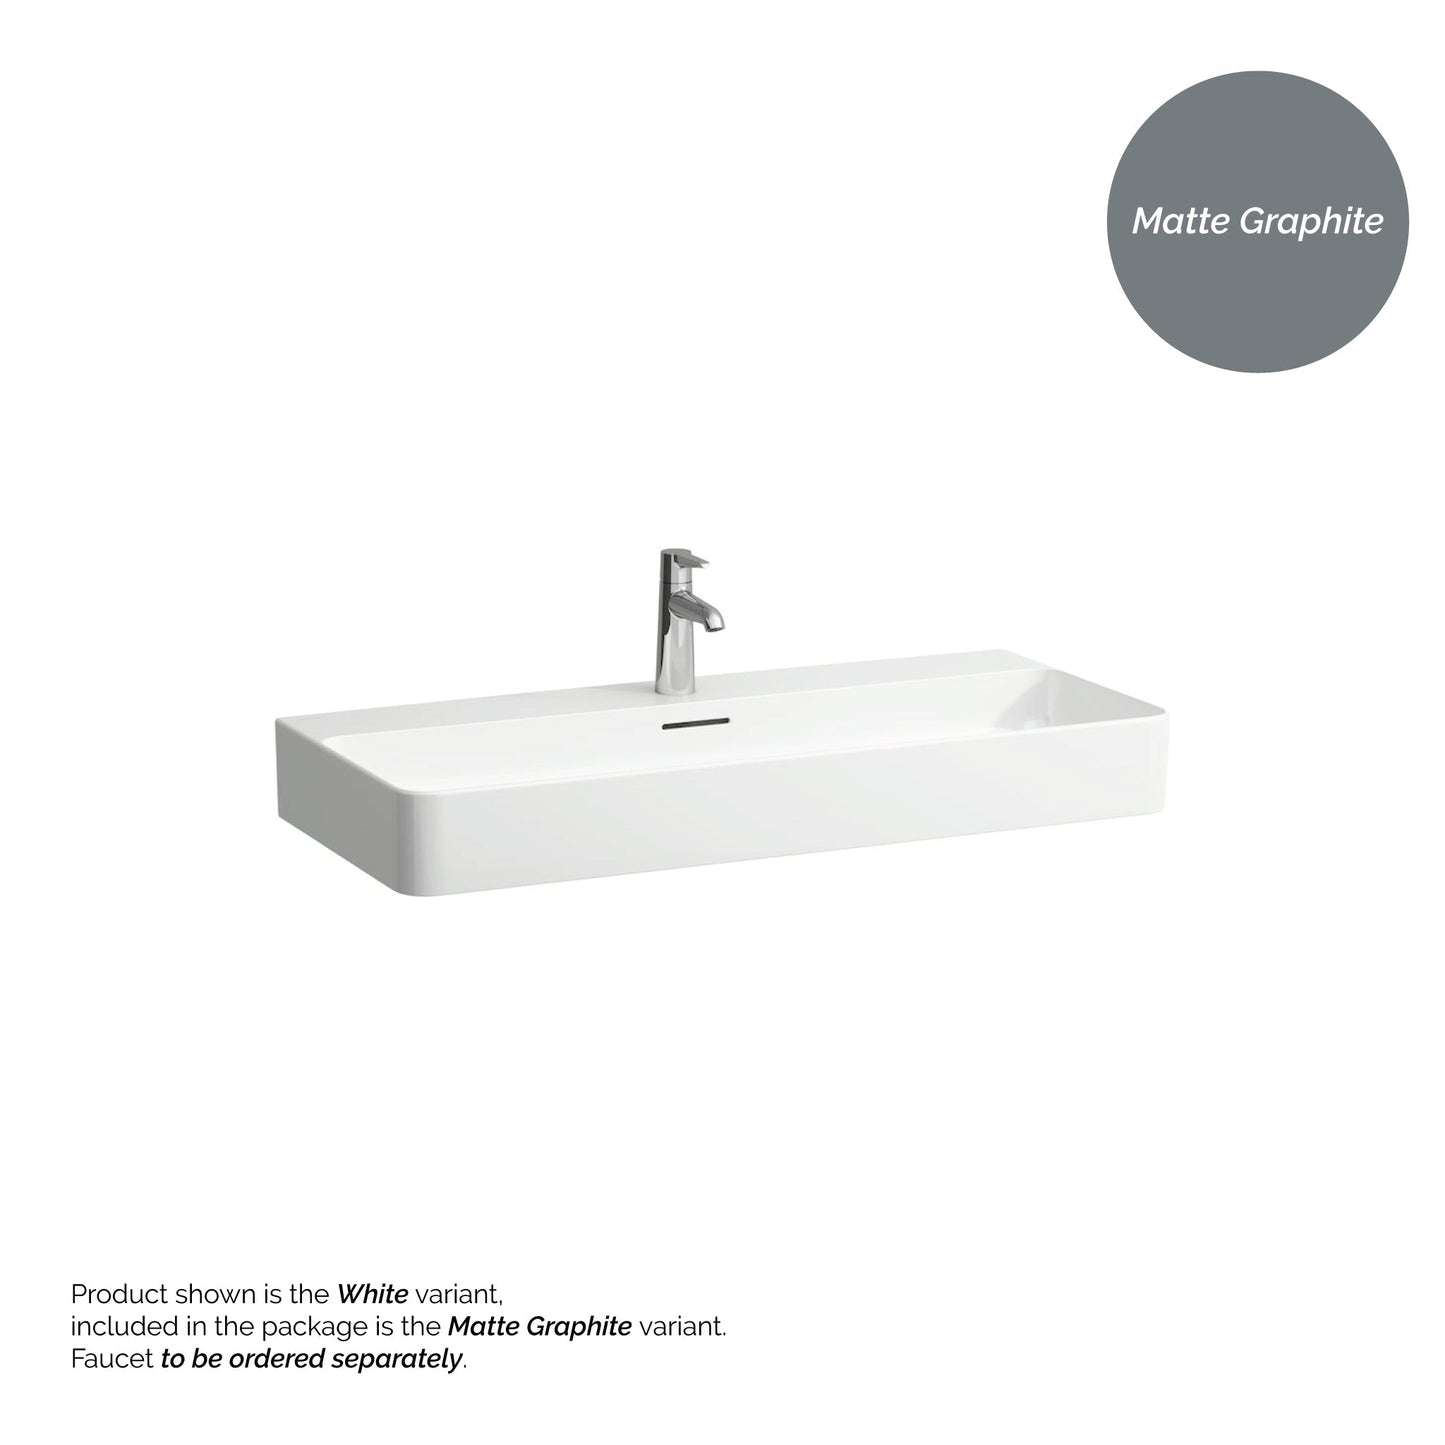 Laufen Val 37" x 17" Matte Graphite Ceramic Countertop Bathroom Sink With Faucet Hole